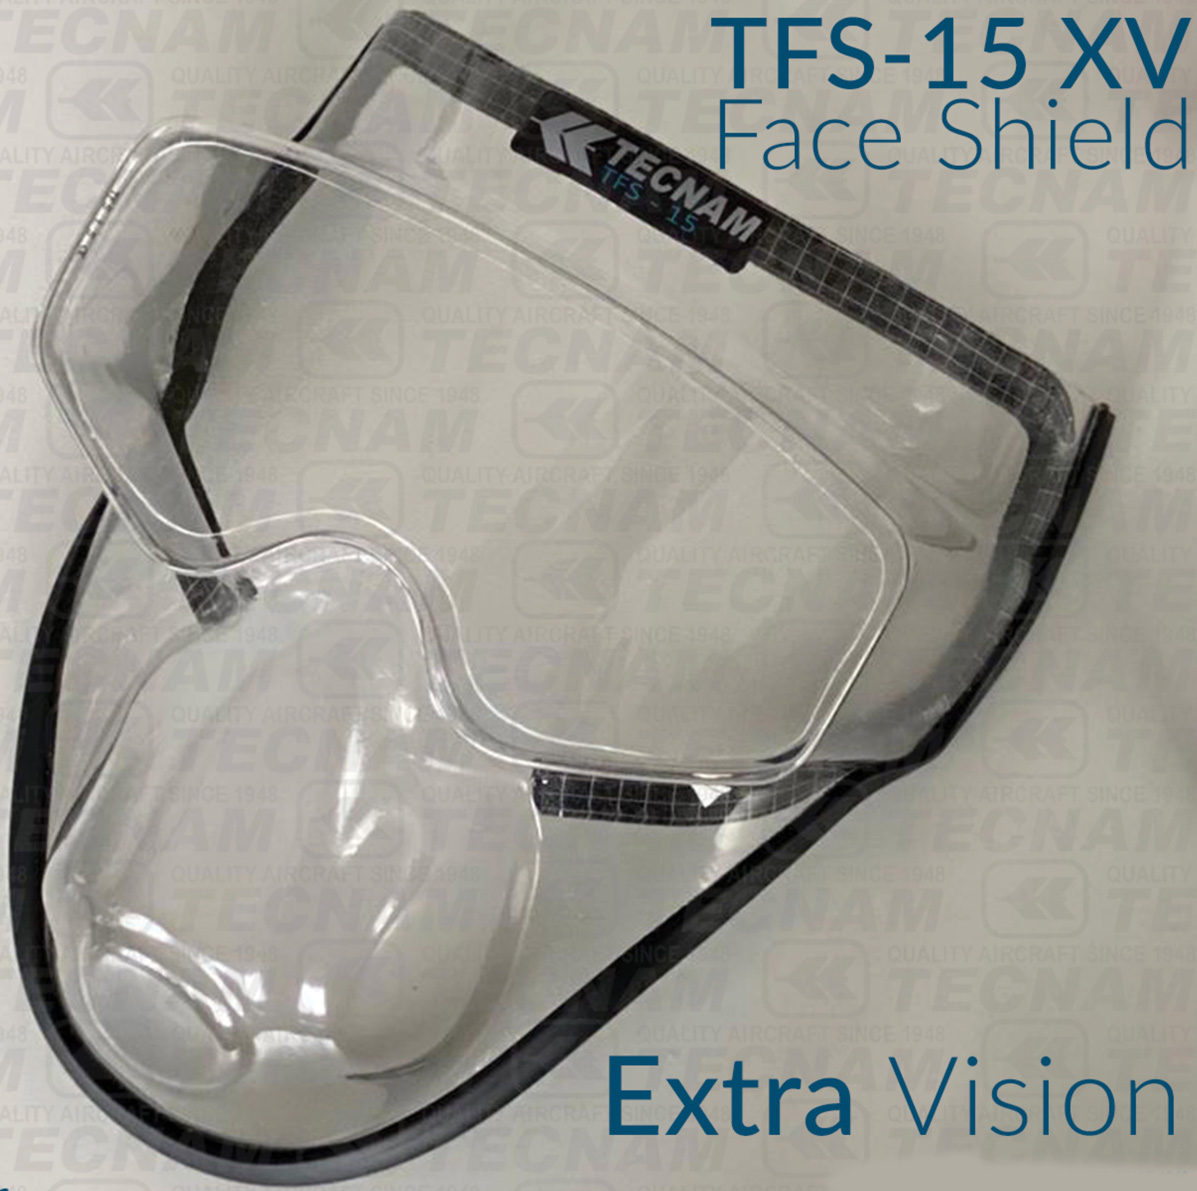 Tecnam TFS-15 XV Extra Vision Face Shield for AviationImage Id:151402